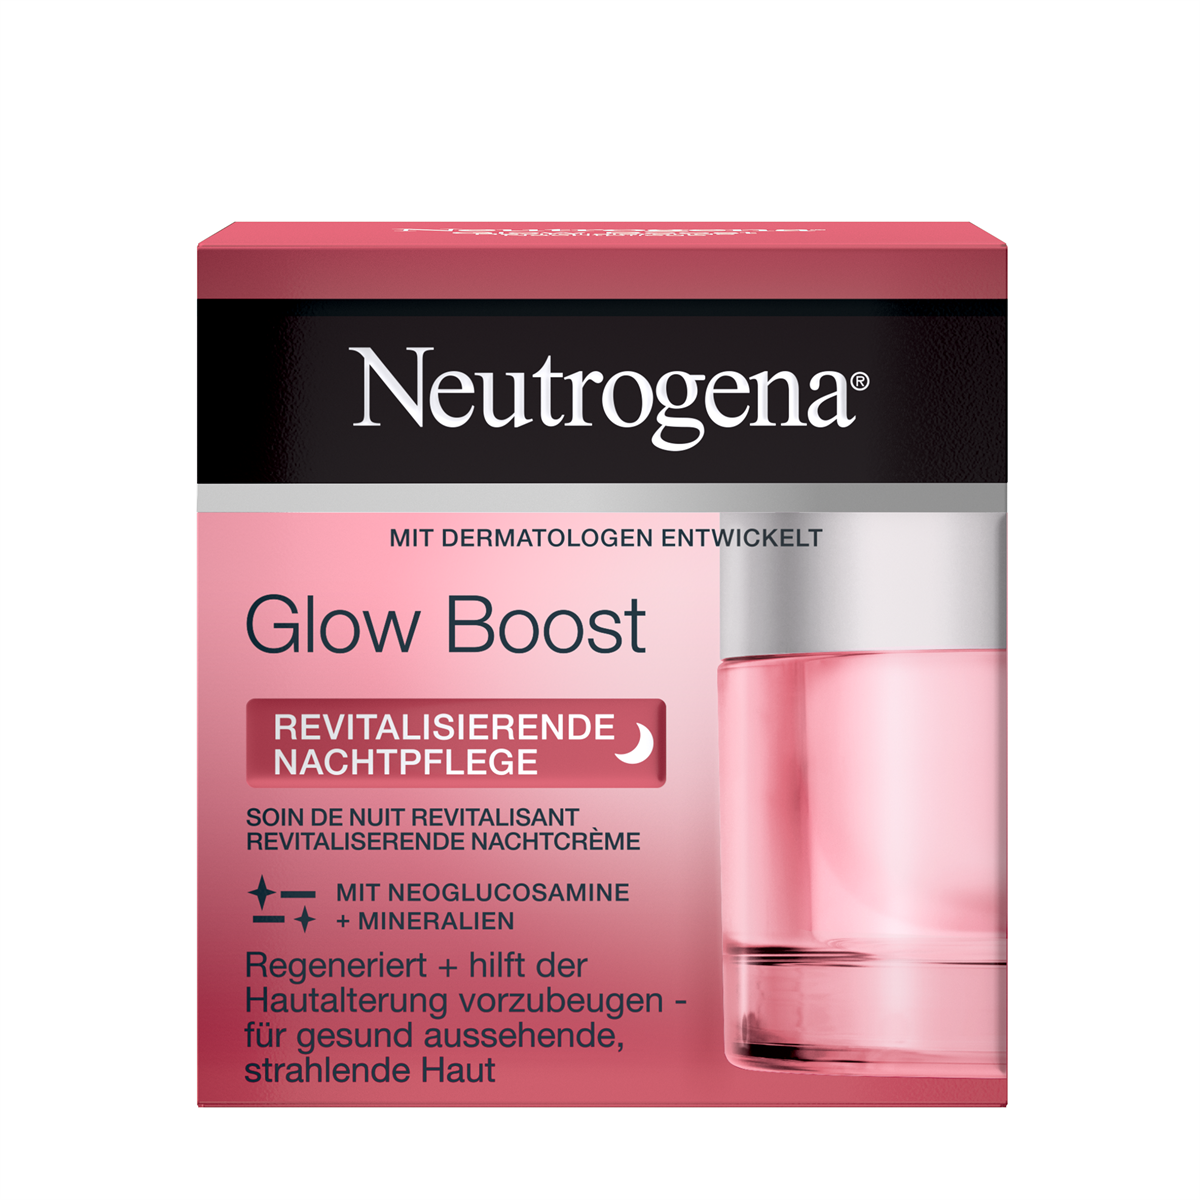 Neutrogena Glow Boost Revitalisierende Nachtpflege 50ml